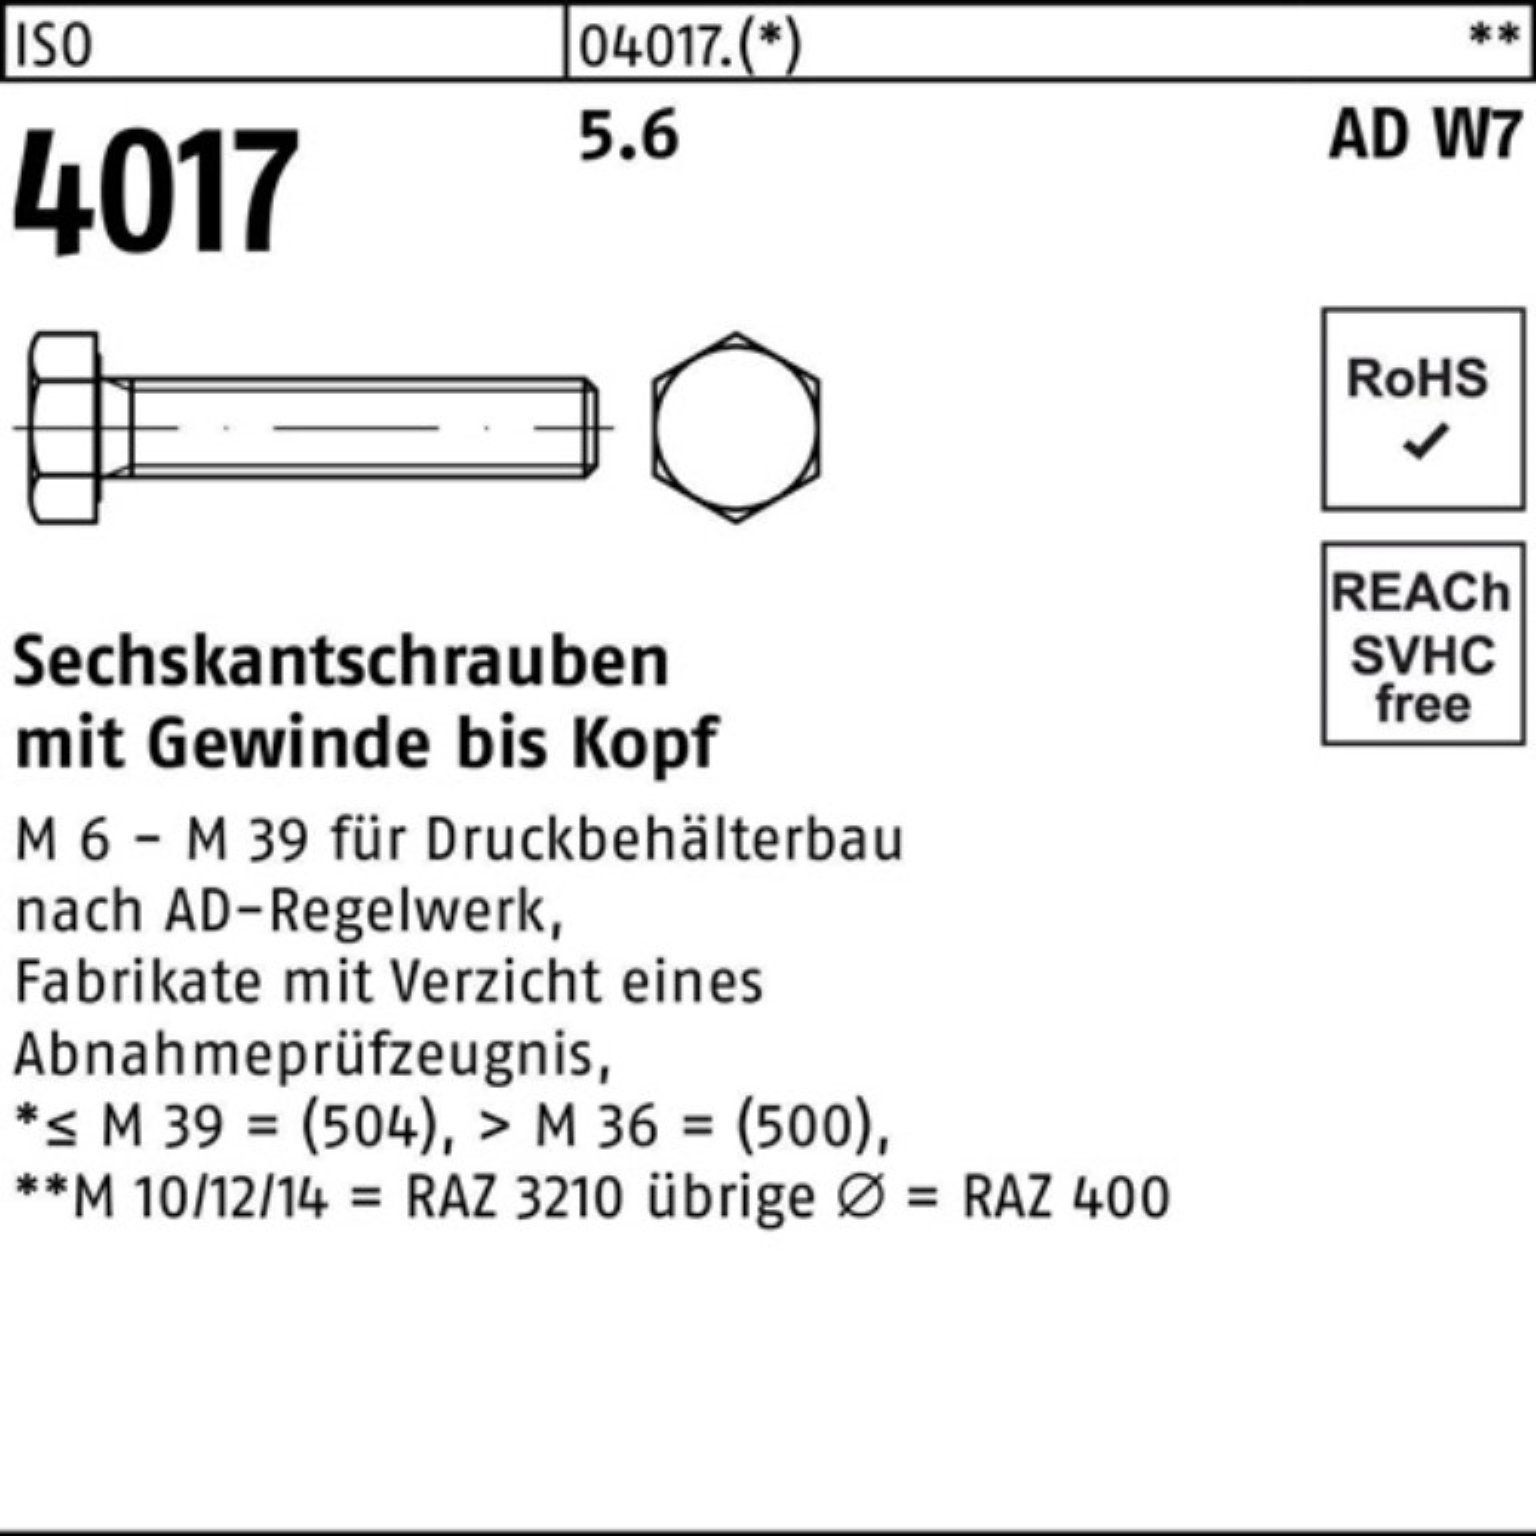 Bufab Sechskantschraube 100er Pack Sechskantschraube ISO 4017 VG M16x 35 5.6 AD W7 50 Stück I